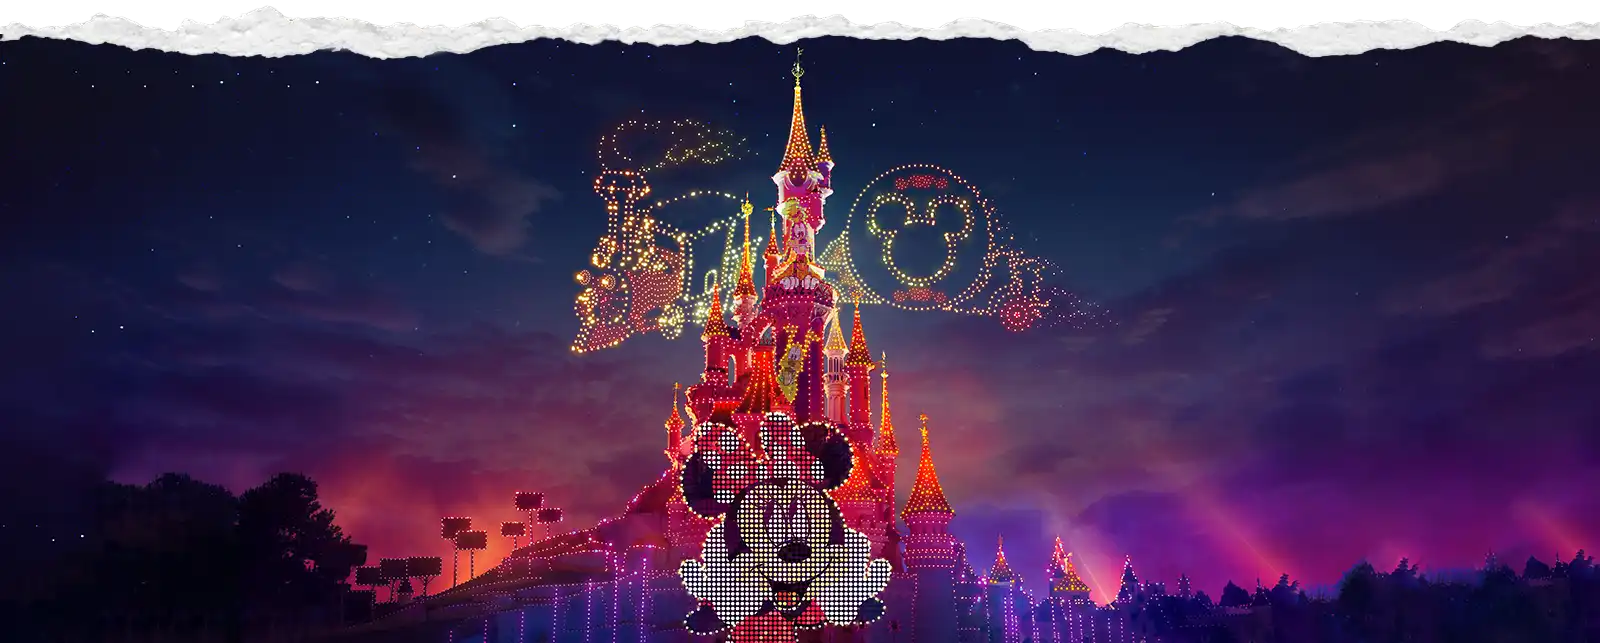 Calendrier Disneyland Paris 2024 - Disney | Beebs